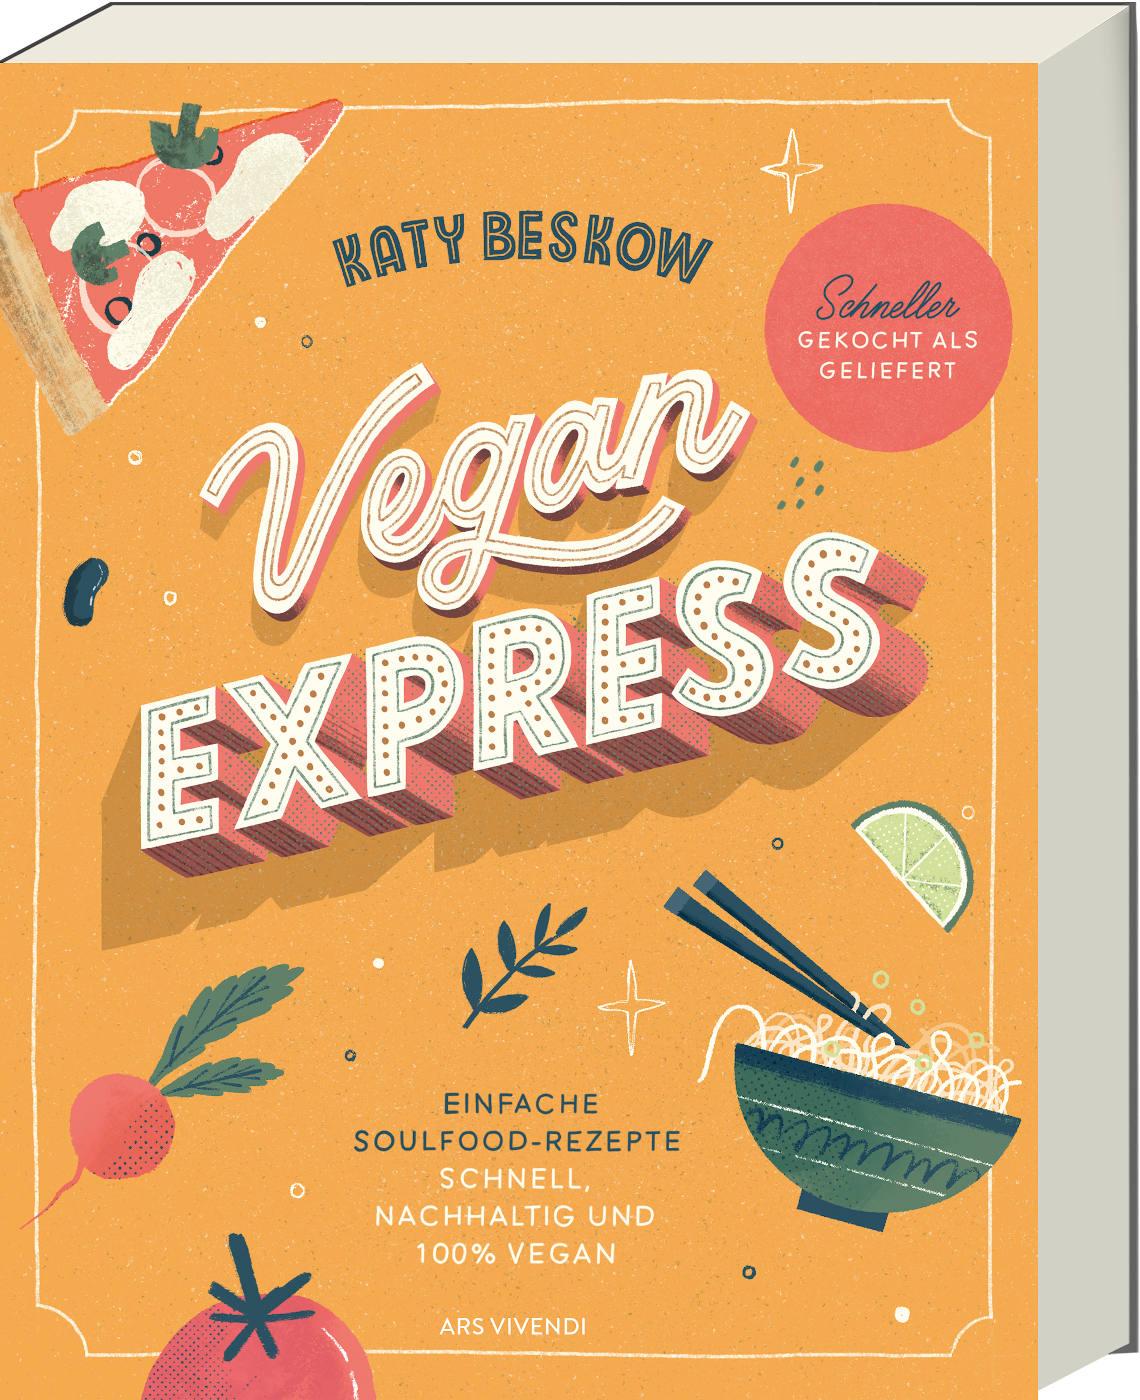 Veganes MAc and Cheese aus Vegan Express // HIMBEER